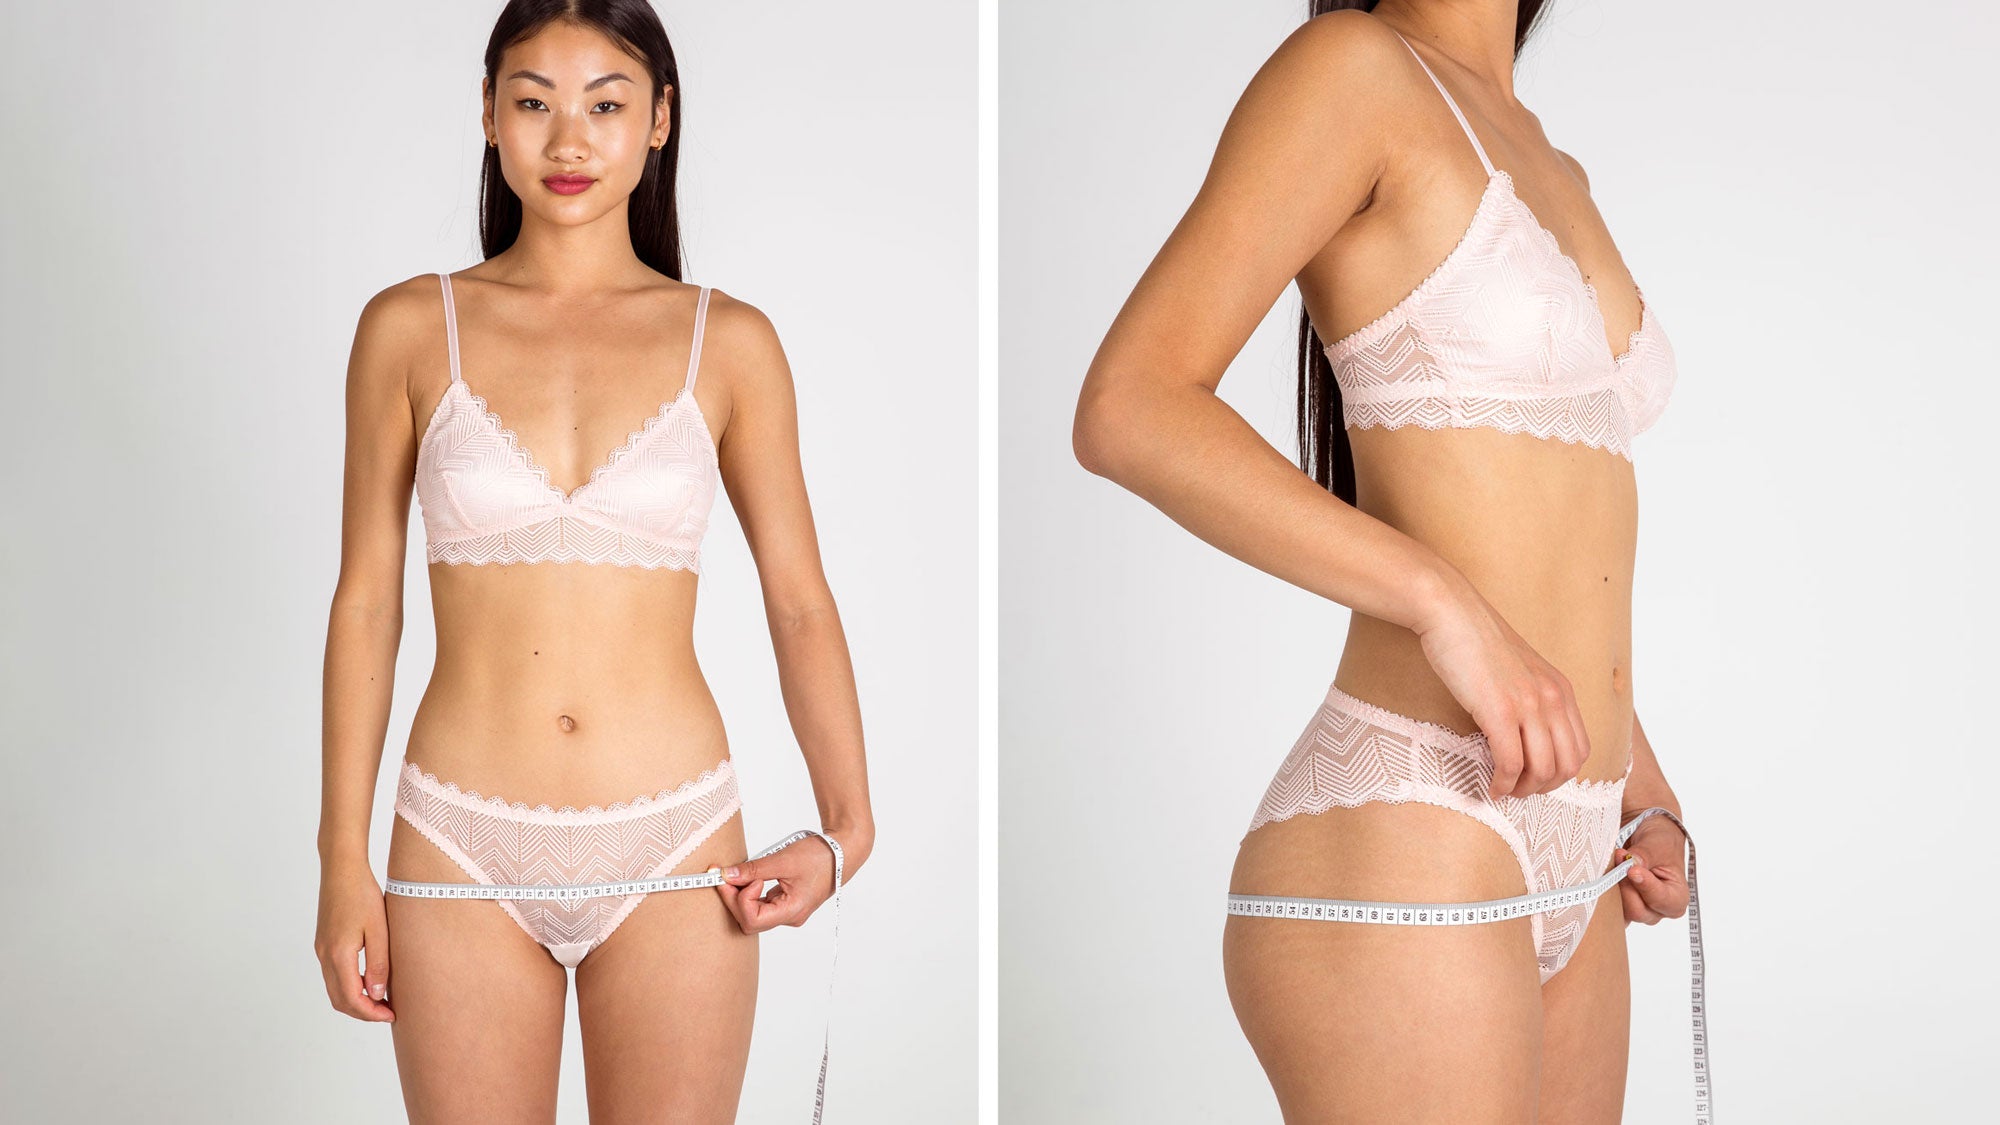 Women's Underwear Bottoms Sexy Lingerie & Intimate Apparel